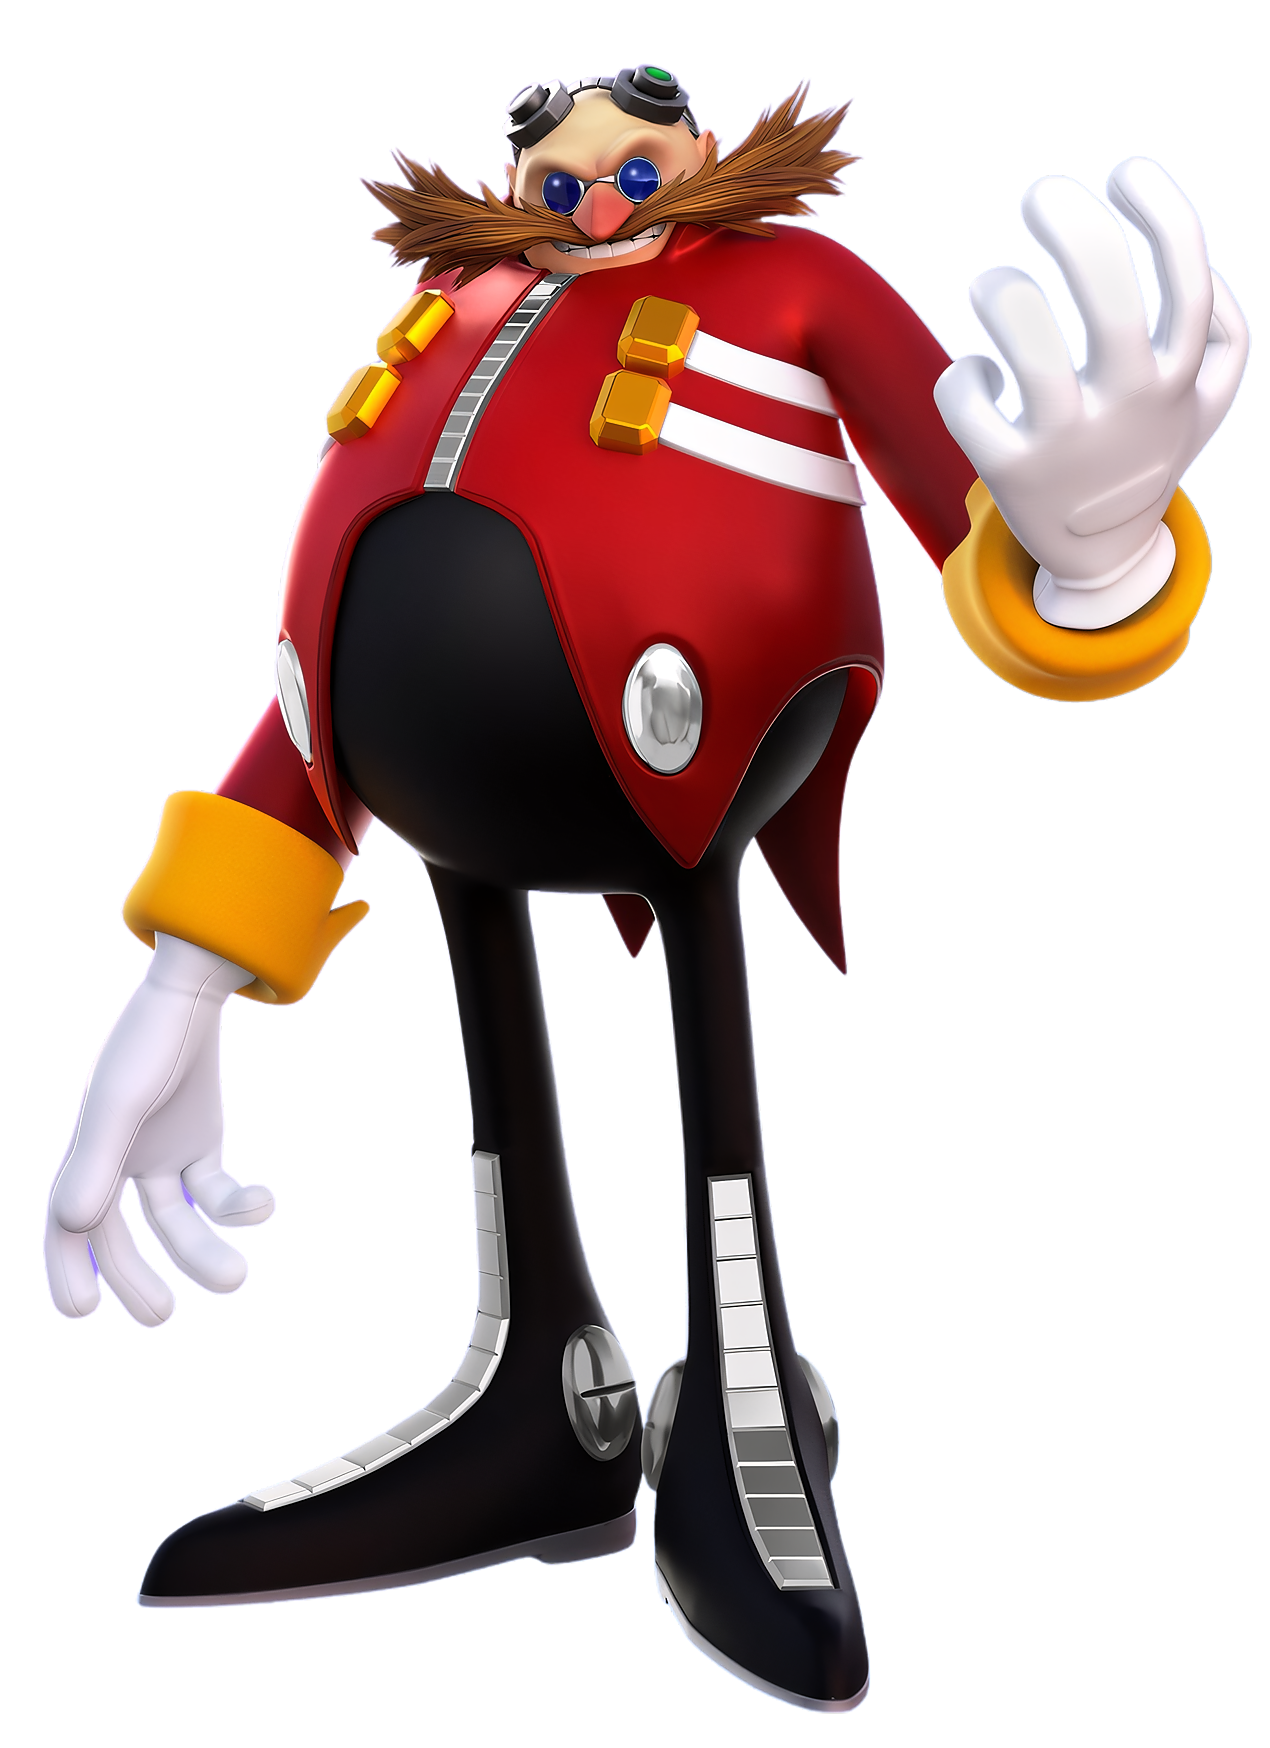 Xbox 360 - Sonic the Hedgehog (2006) - Dr. Eggman - The Models